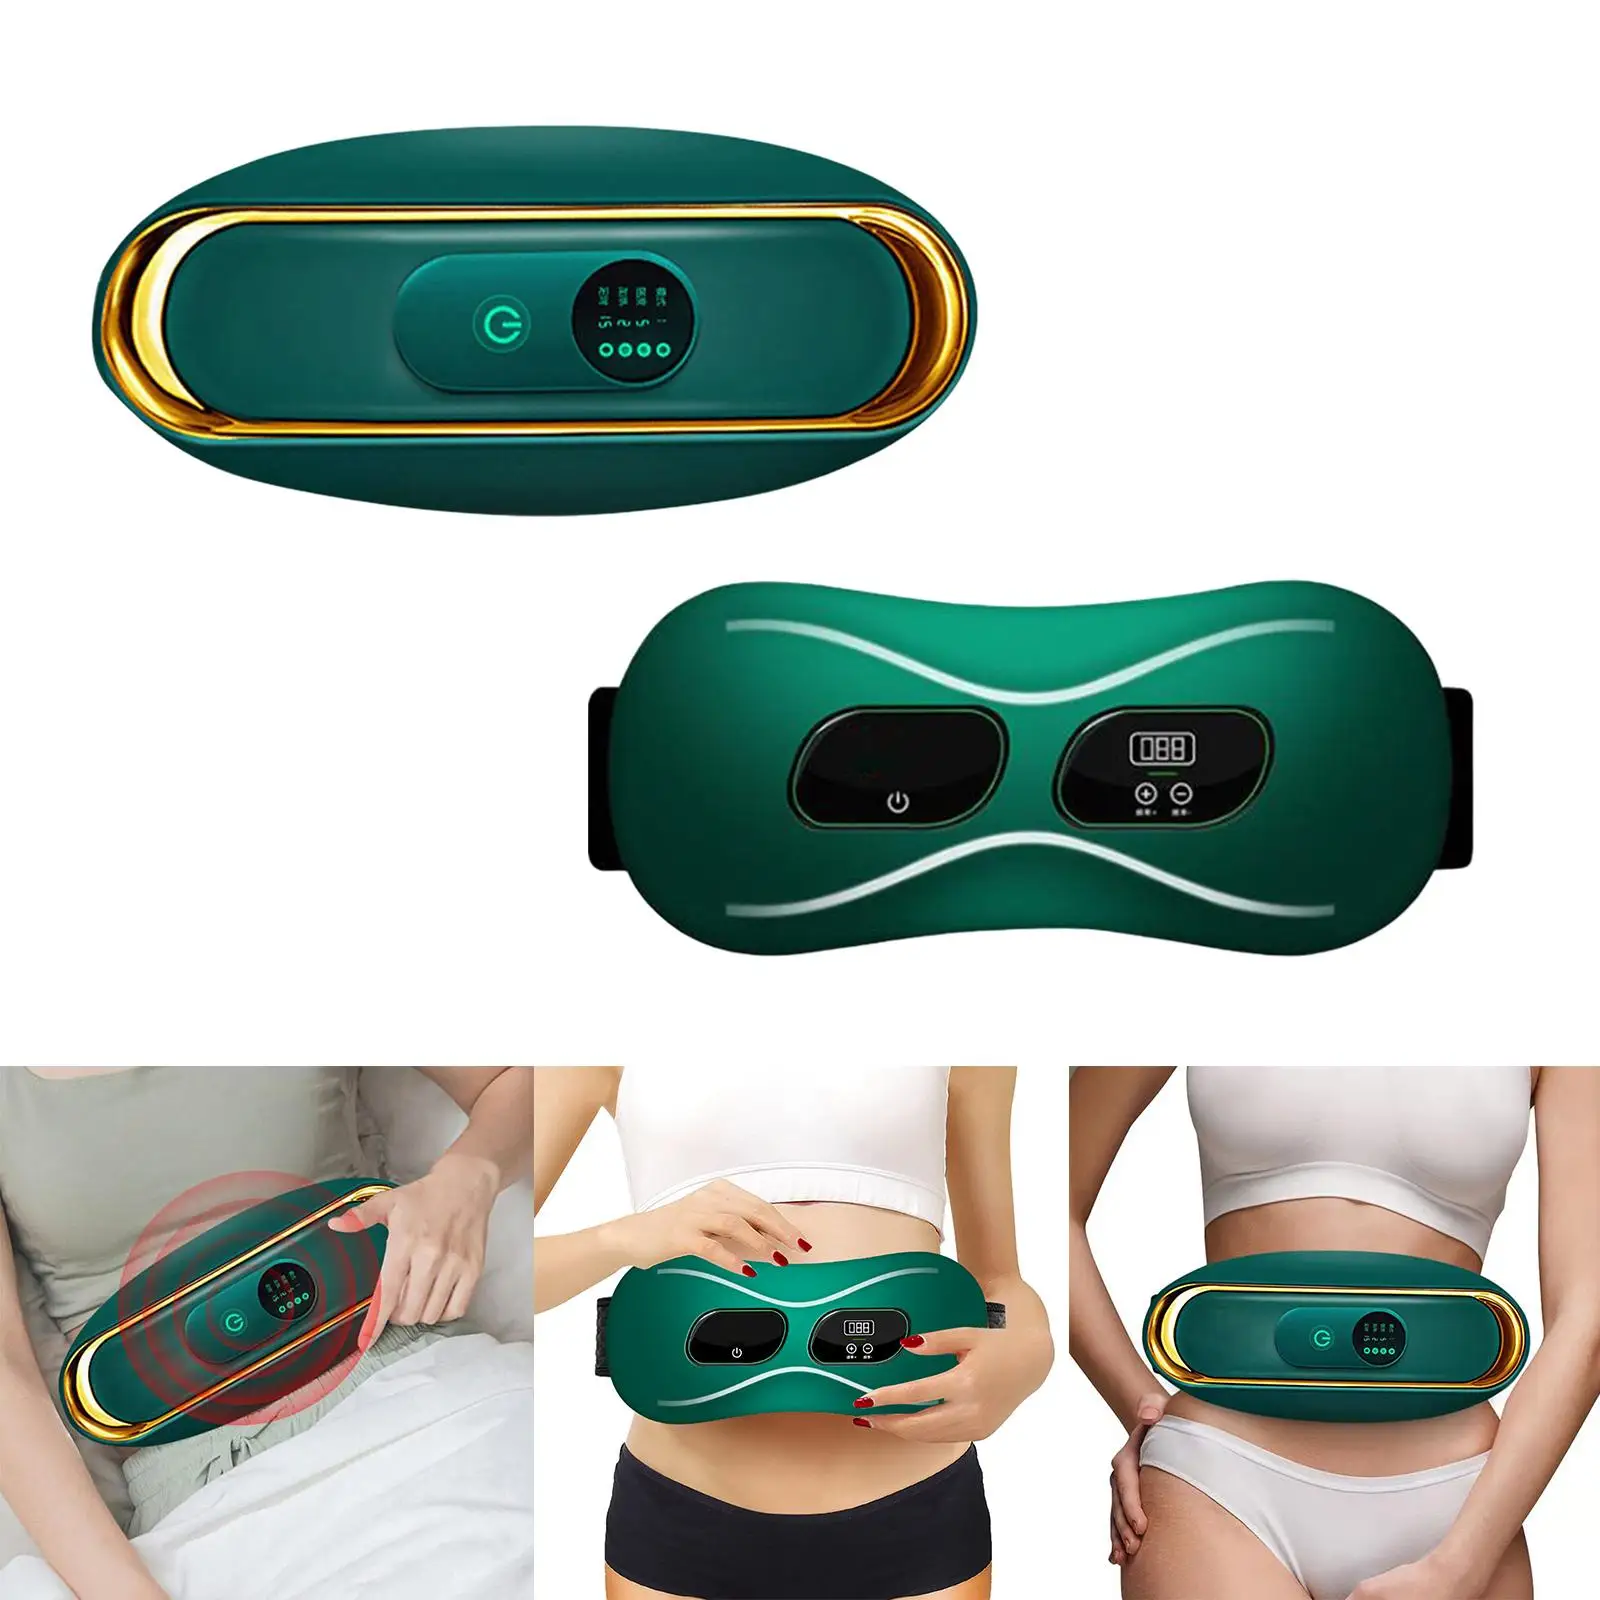 Slimming Belt Vibration Massage Heating Waist Trainer Stimulator for Fitness Home